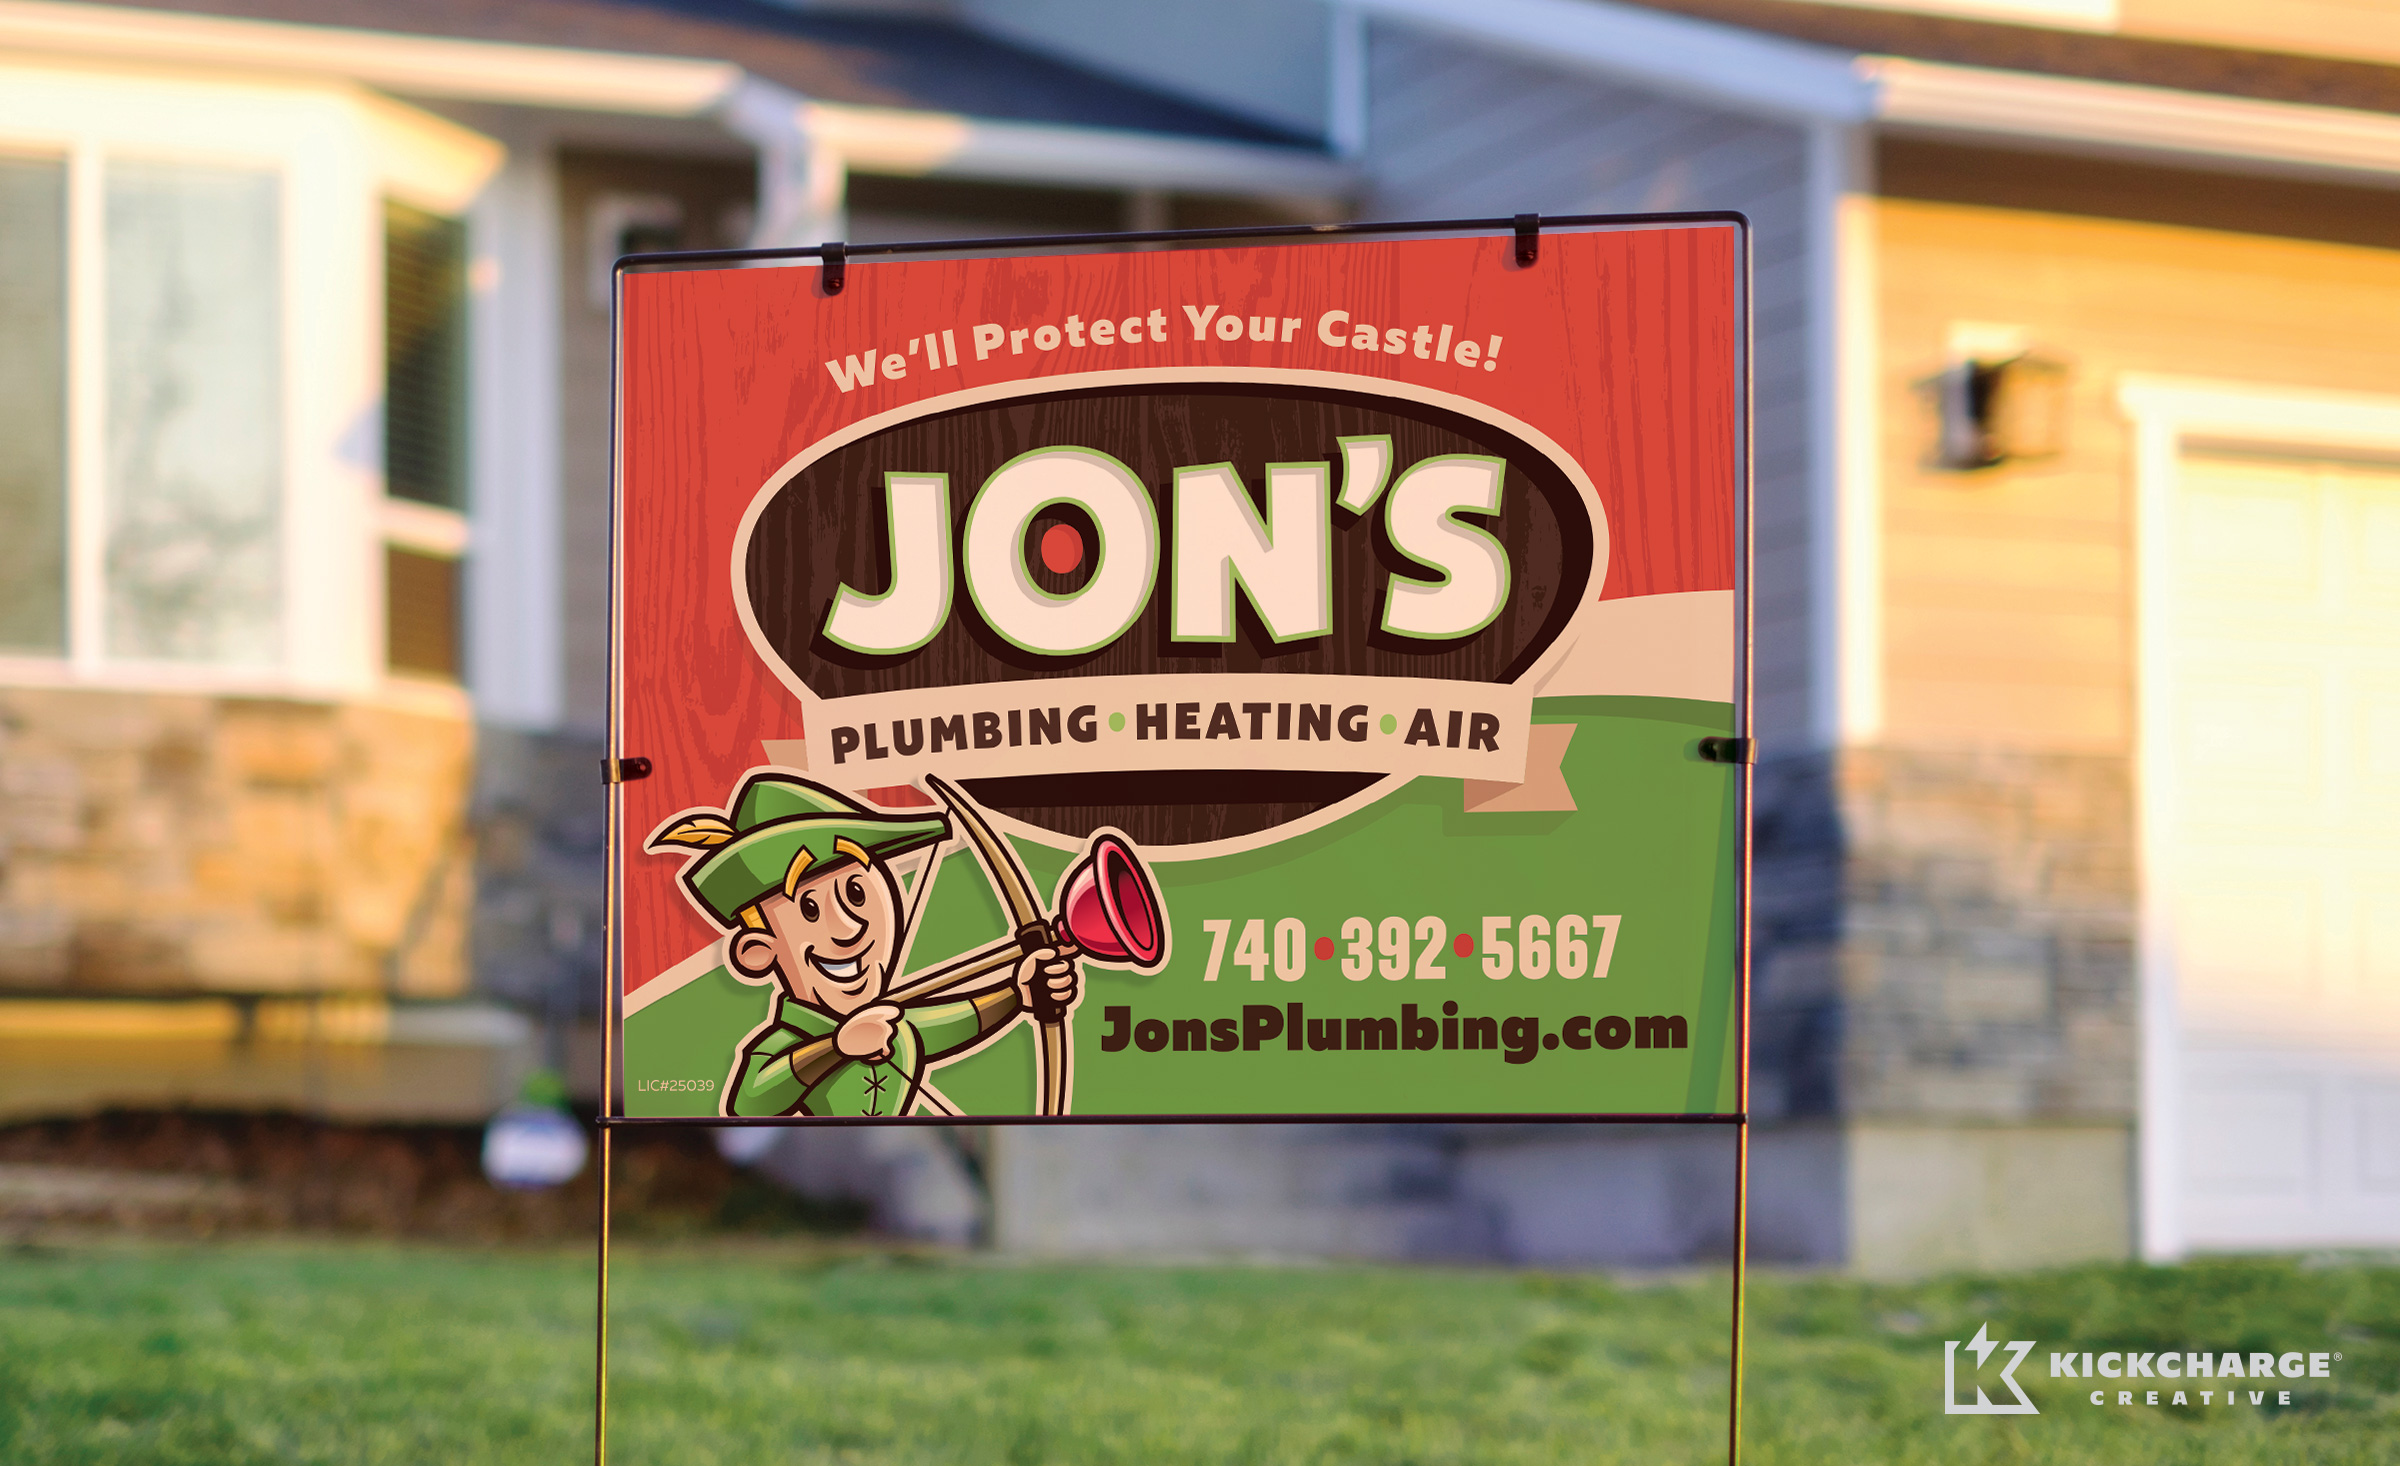 Jon's Plumbing, Heating & Air